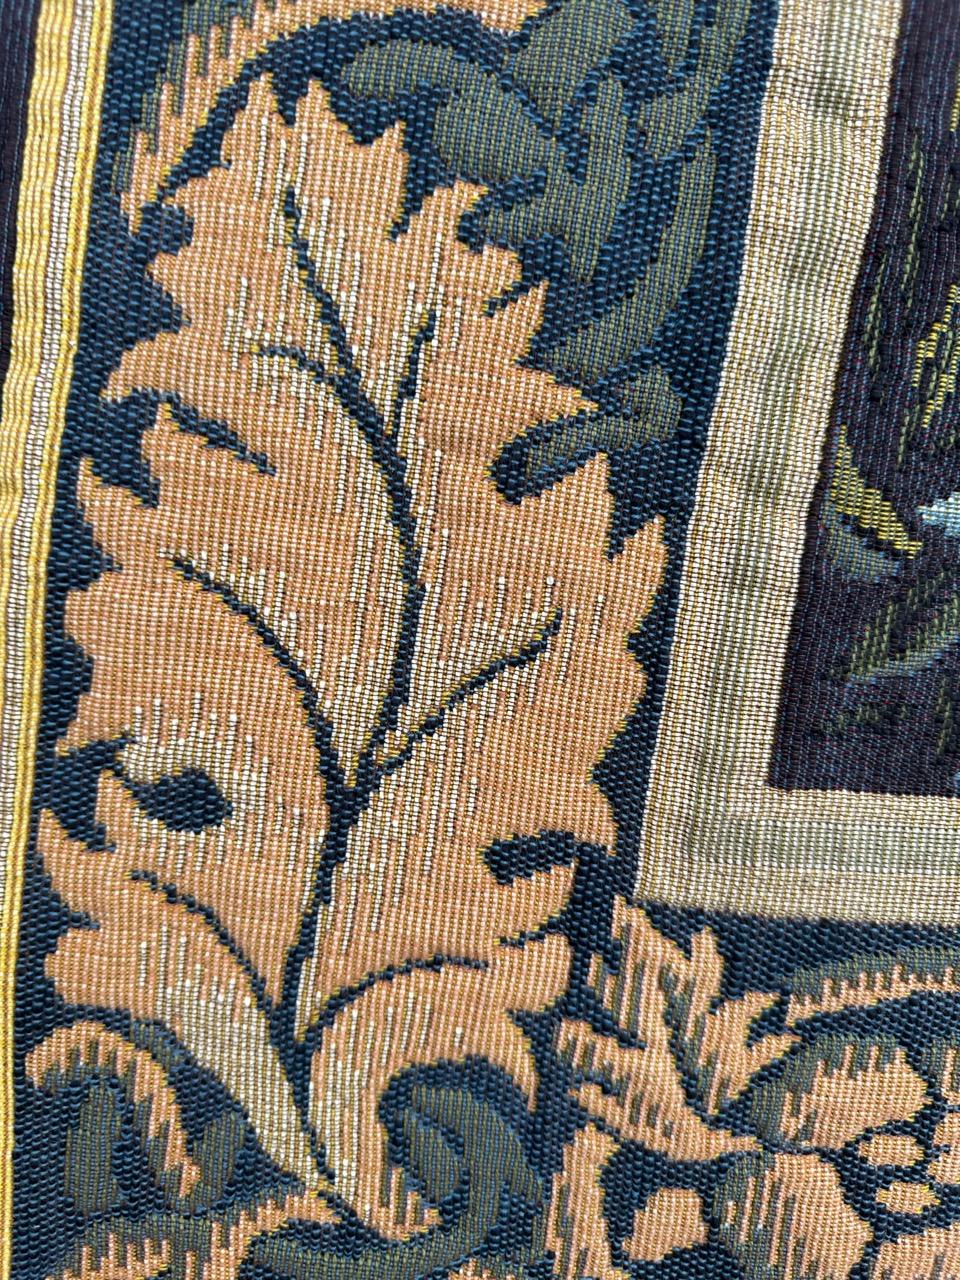 Bobyrug’s Wonderful Large Jaquar Tapestry with Marriage Design  For Sale 5